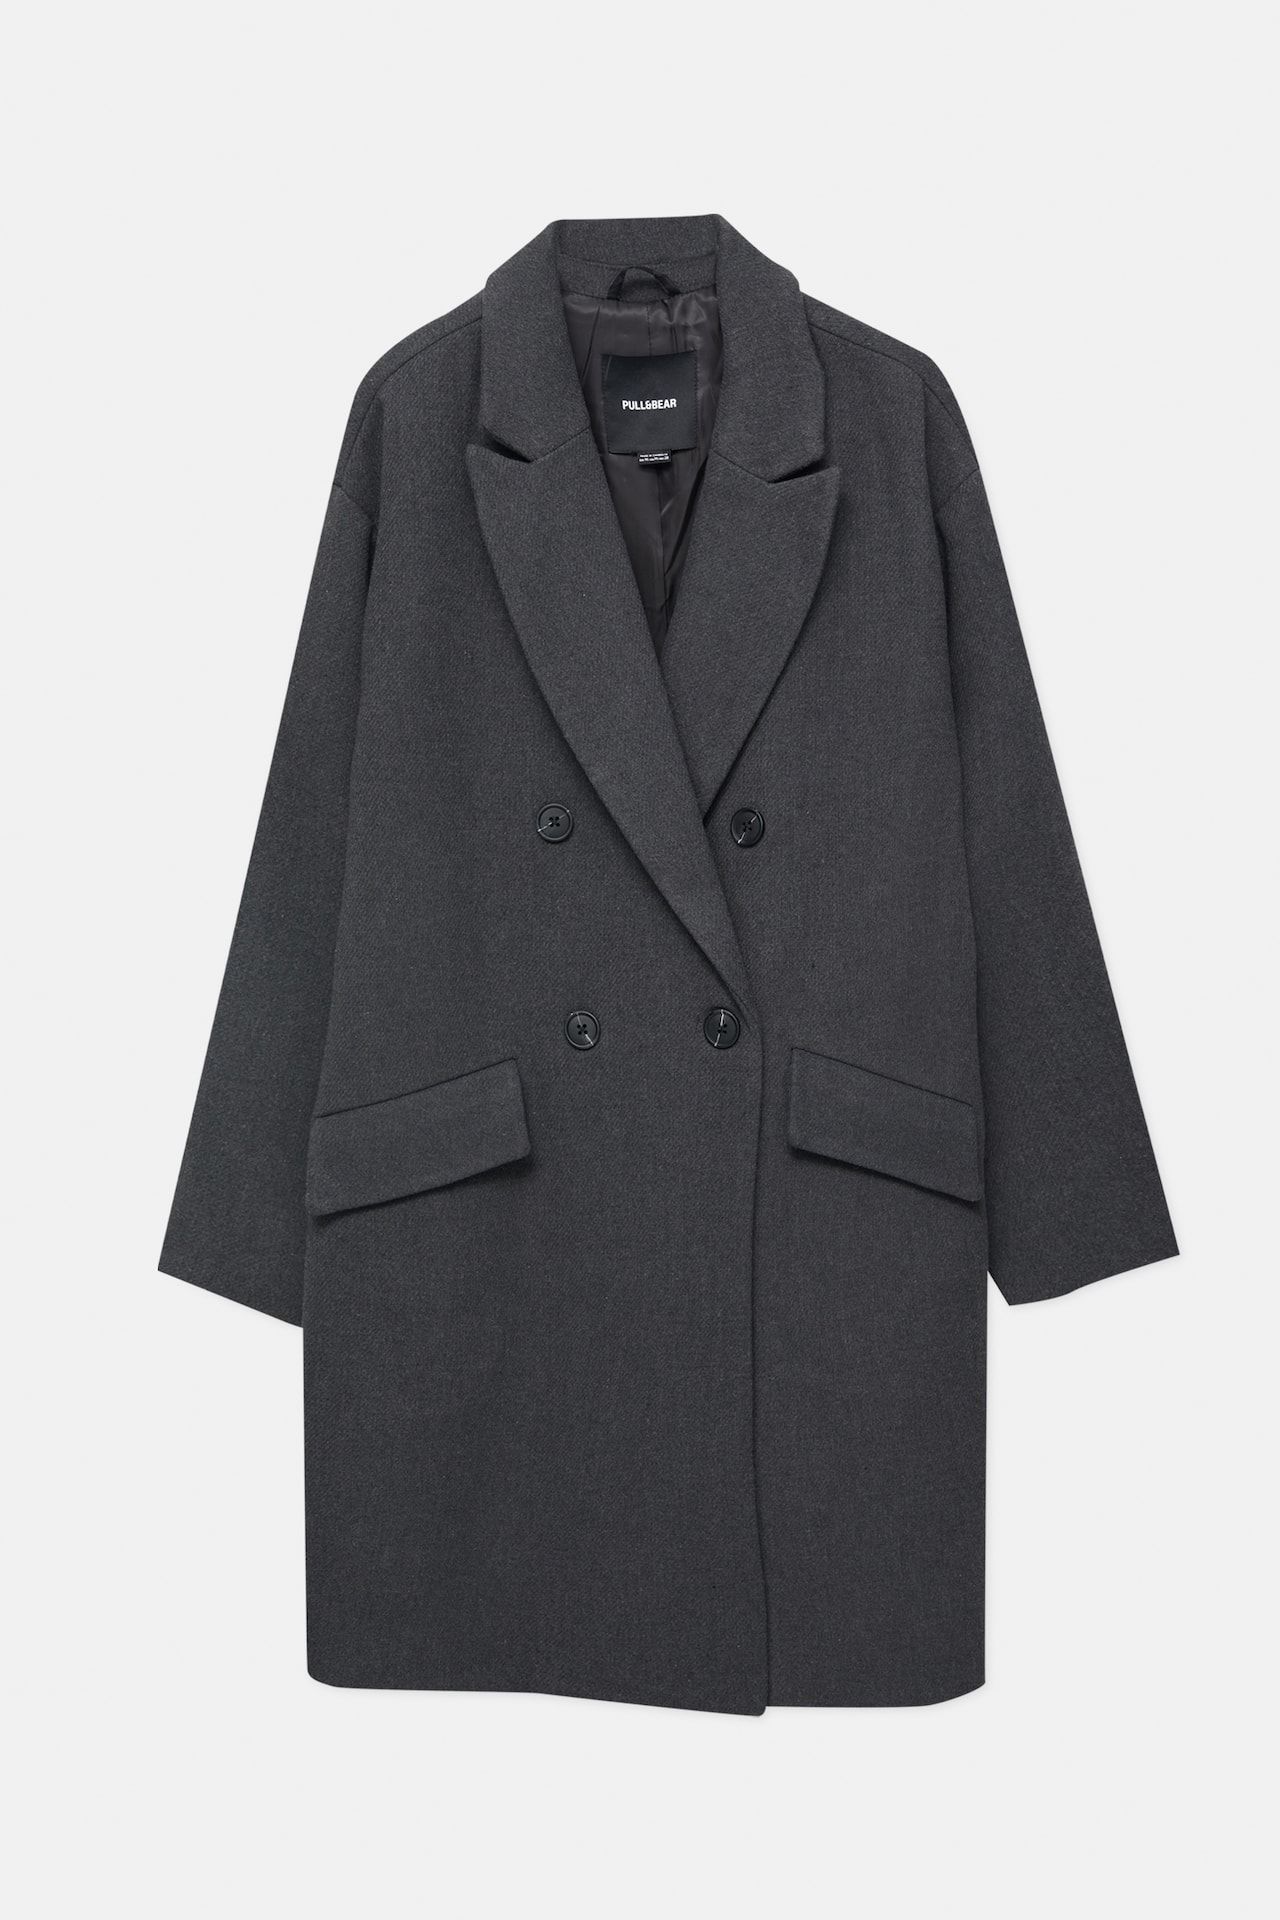 Oversize felt texture coat | PULL and BEAR UK